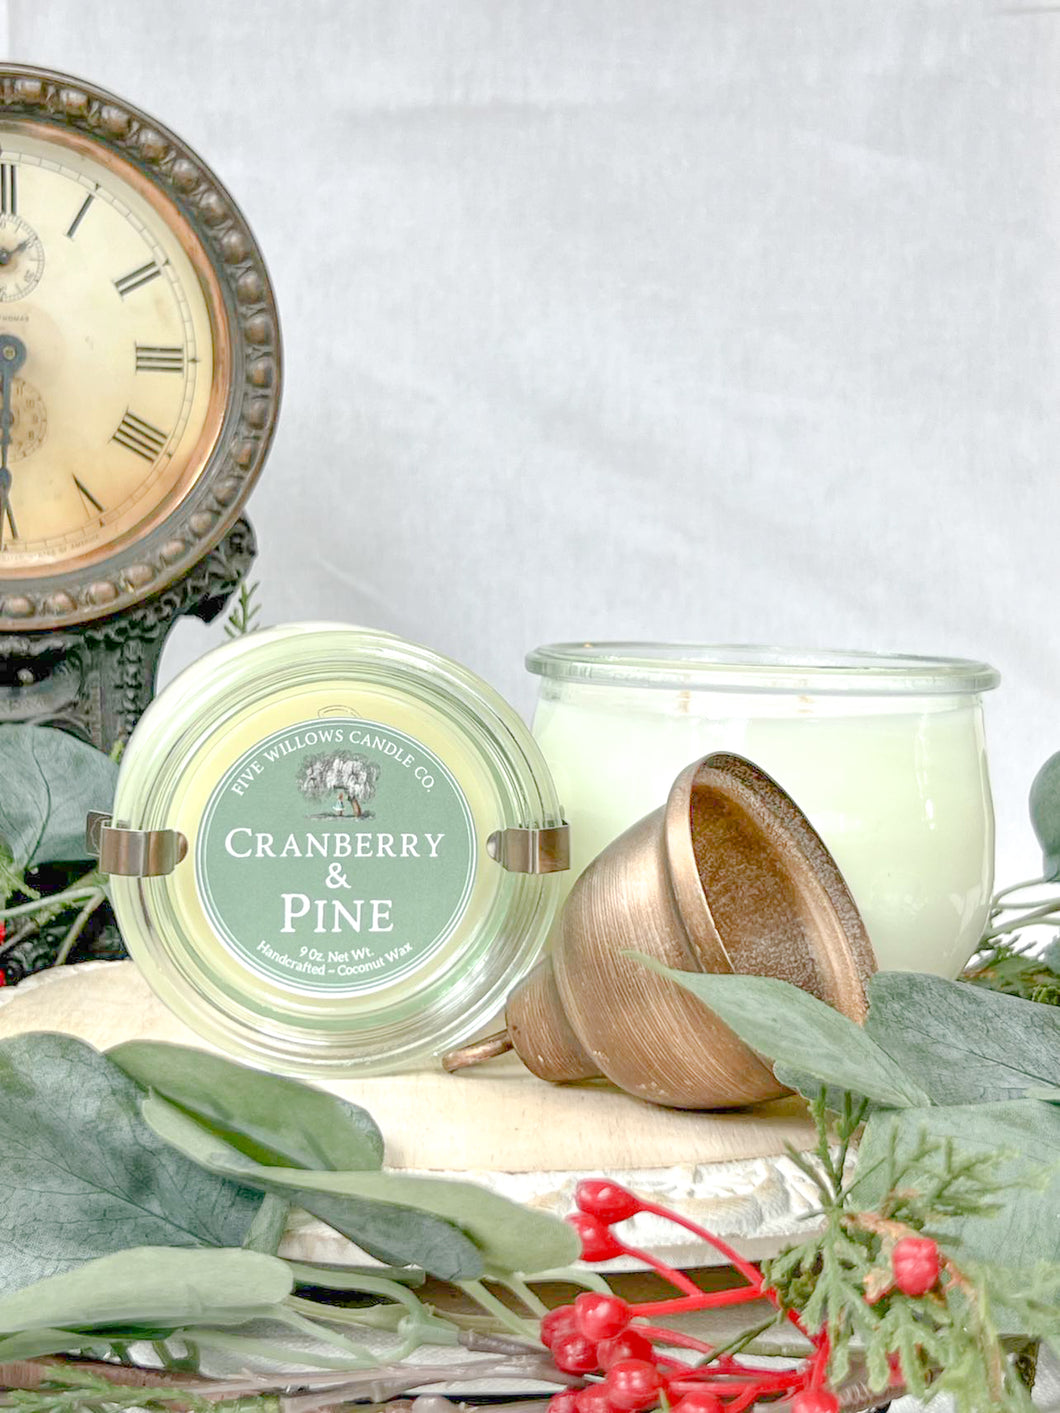 Cranberry & Pine 9 oz. European Preserve Jar